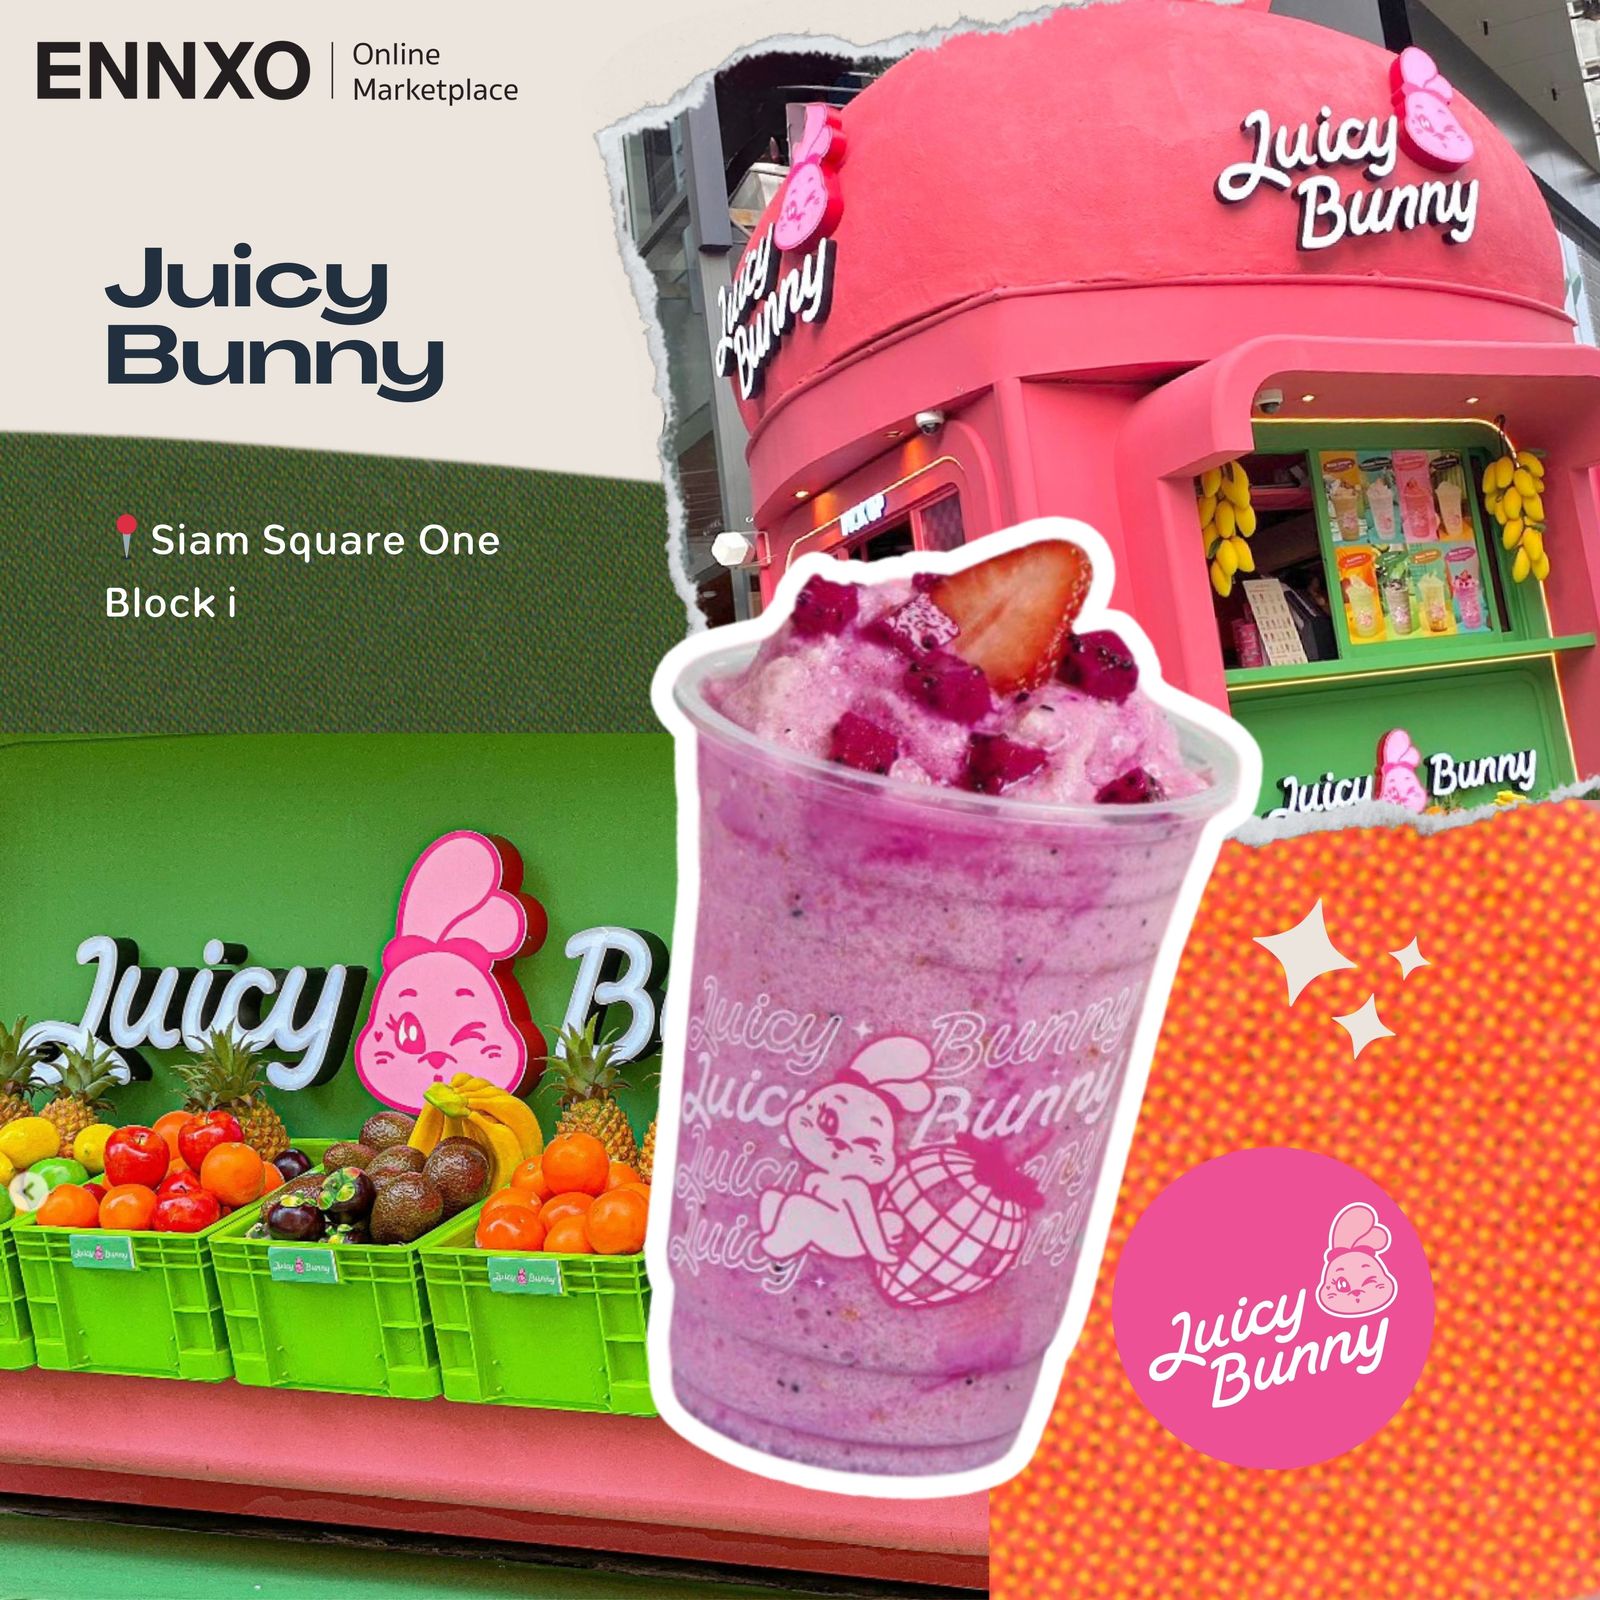 Juicy Bunny Bangkok